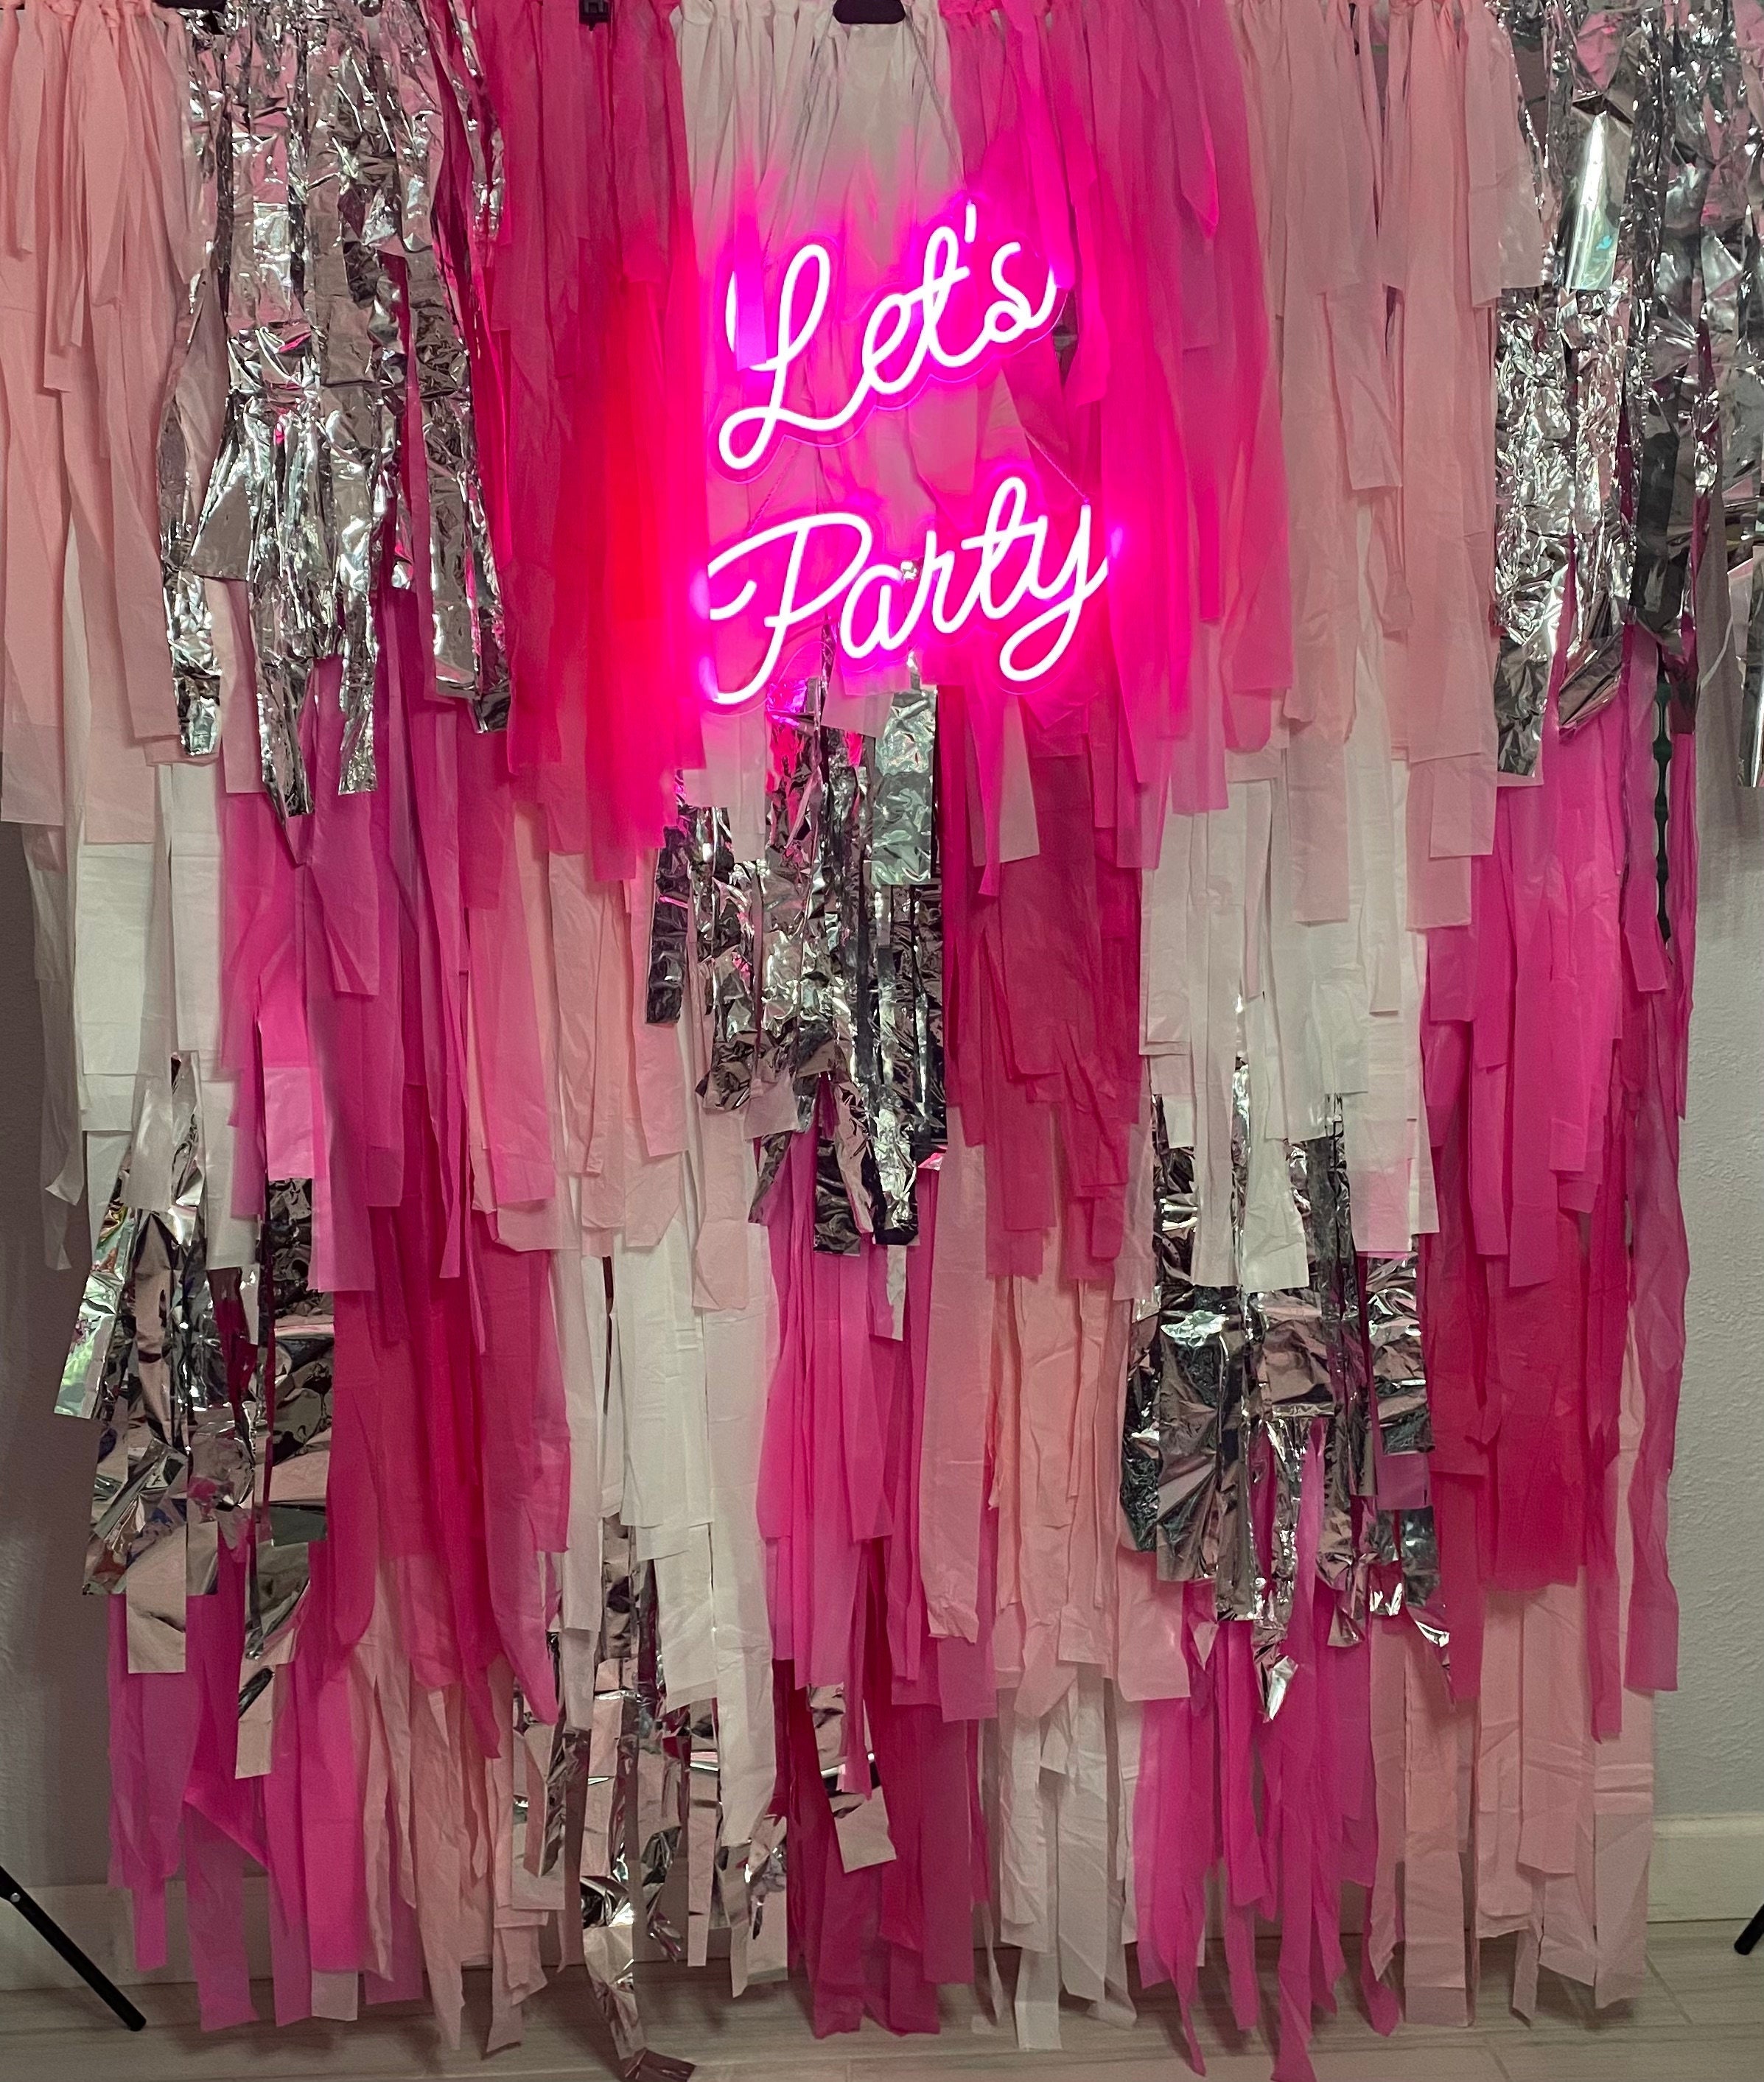 Custom Fringe Backdrop the Pretty in Pink - Etsy